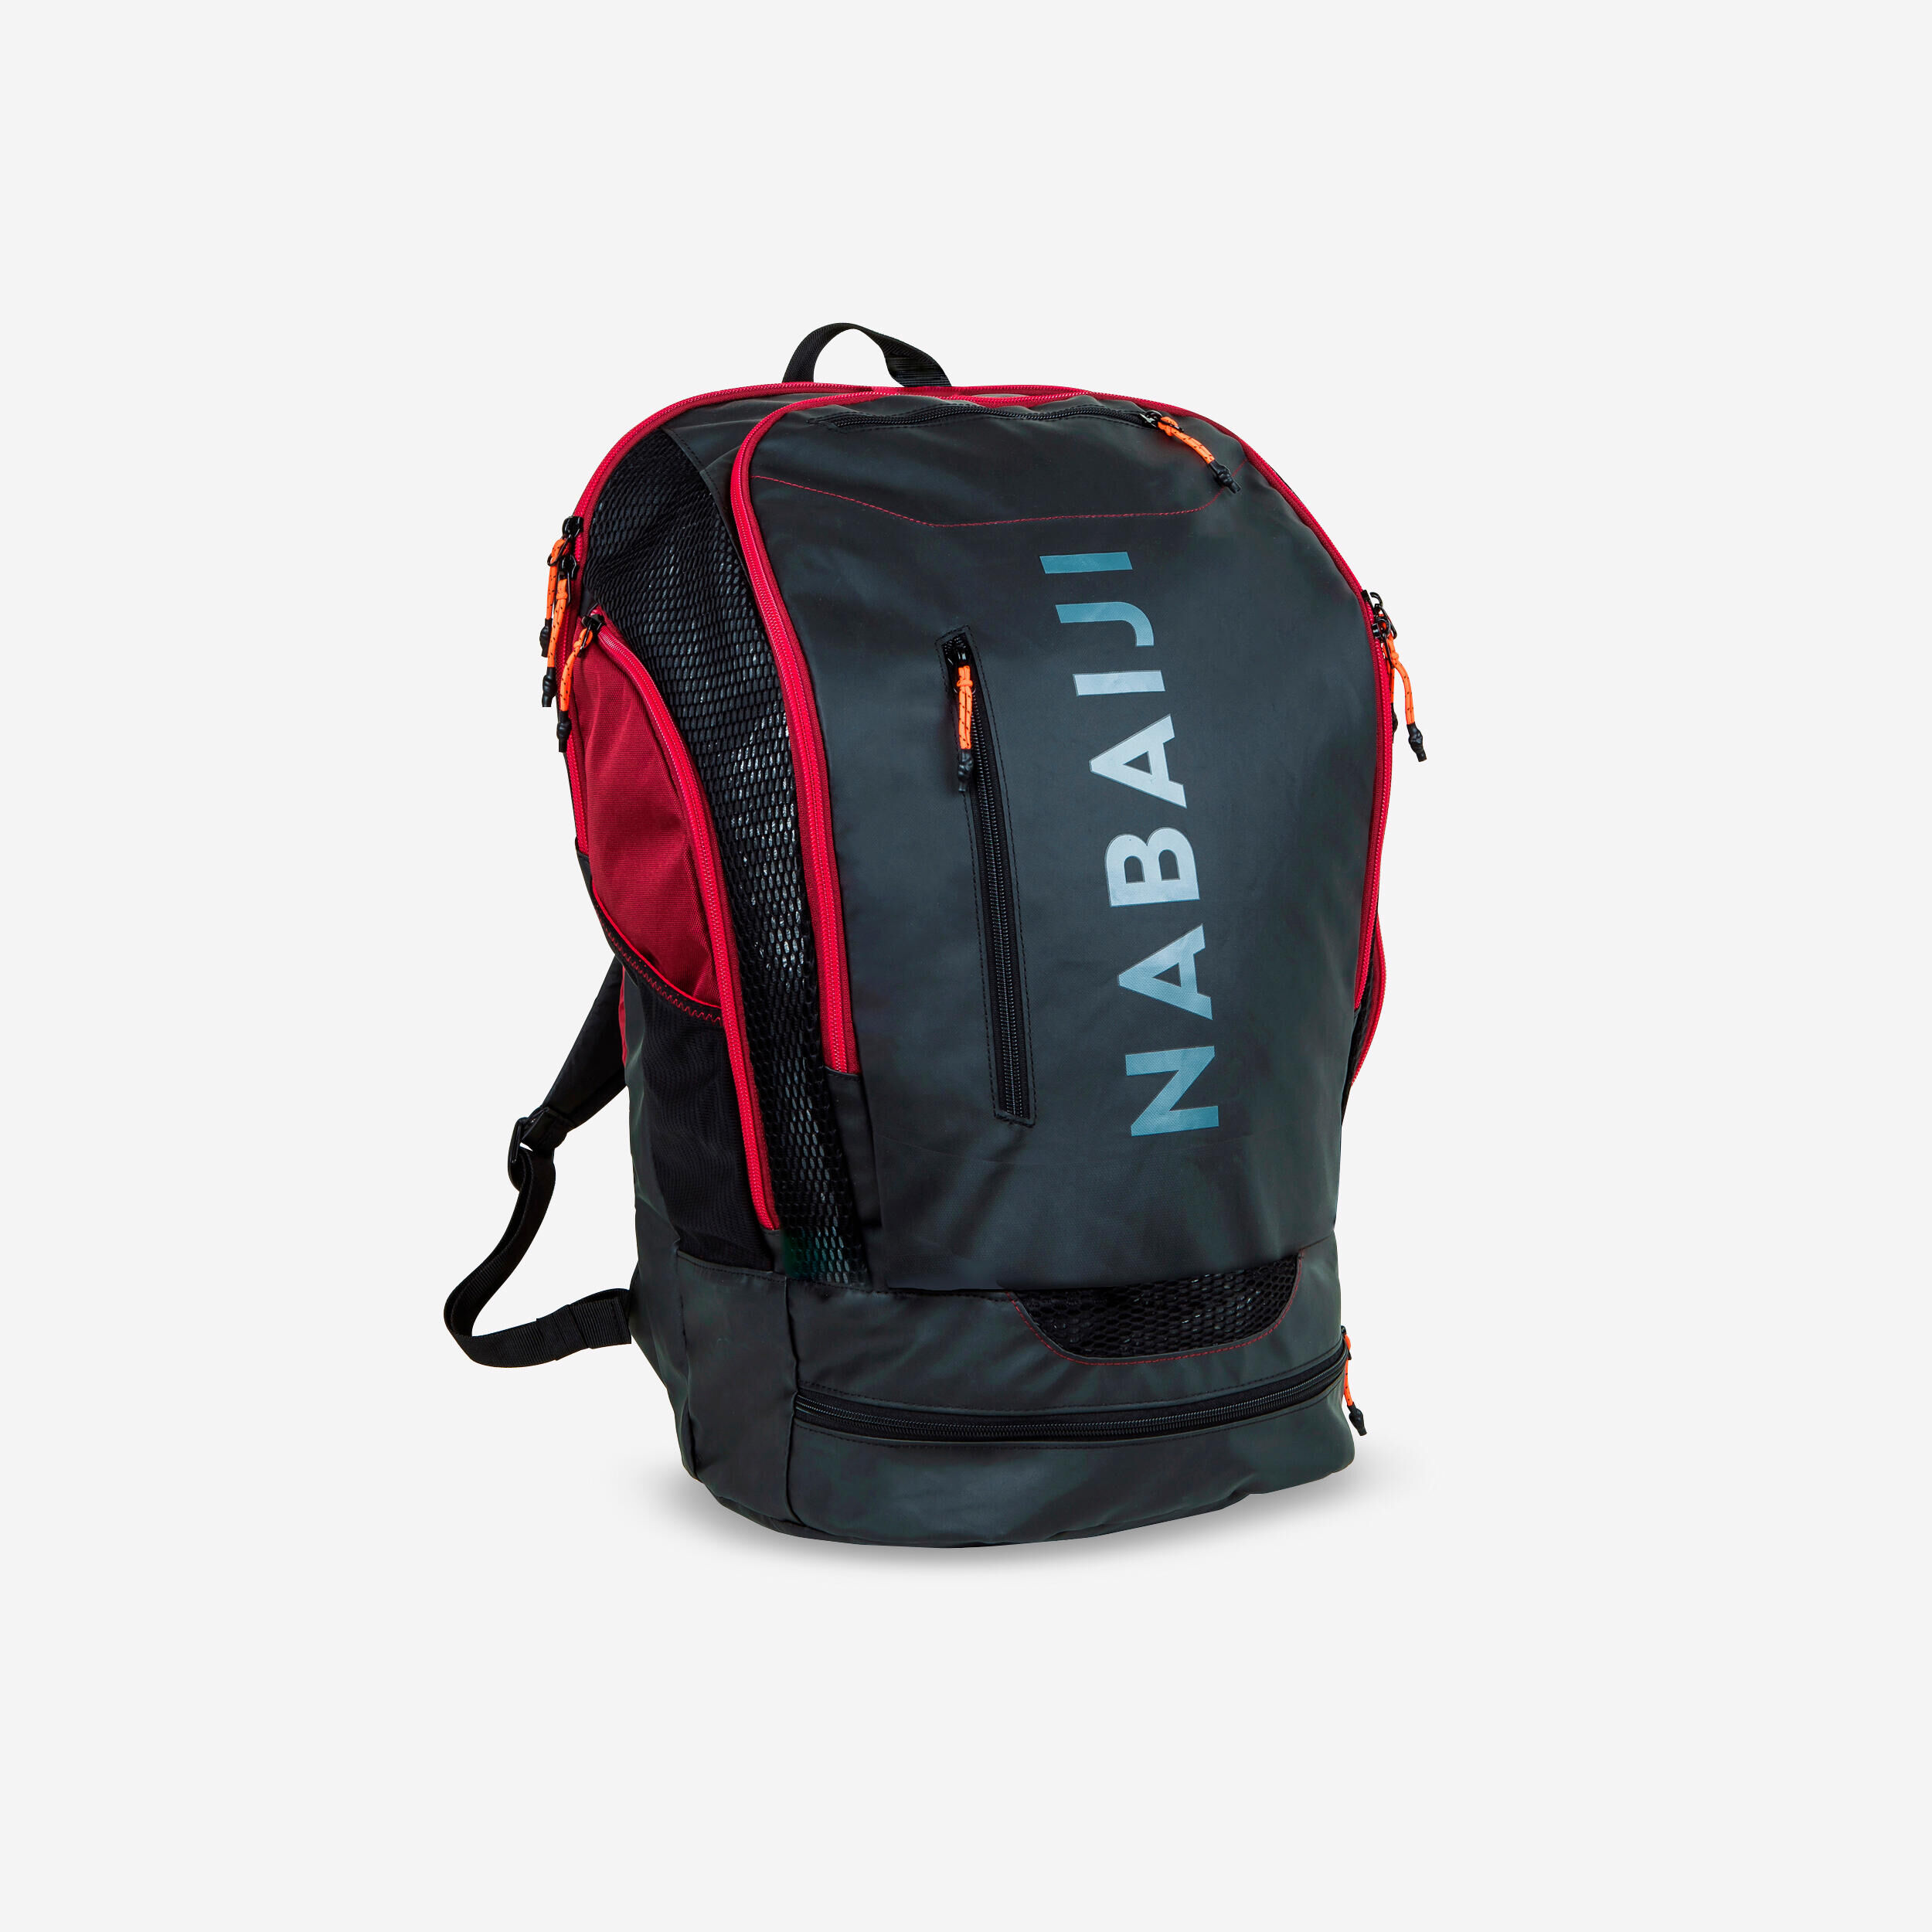 NABAIJI Swimming Backpack 40L 900 black red